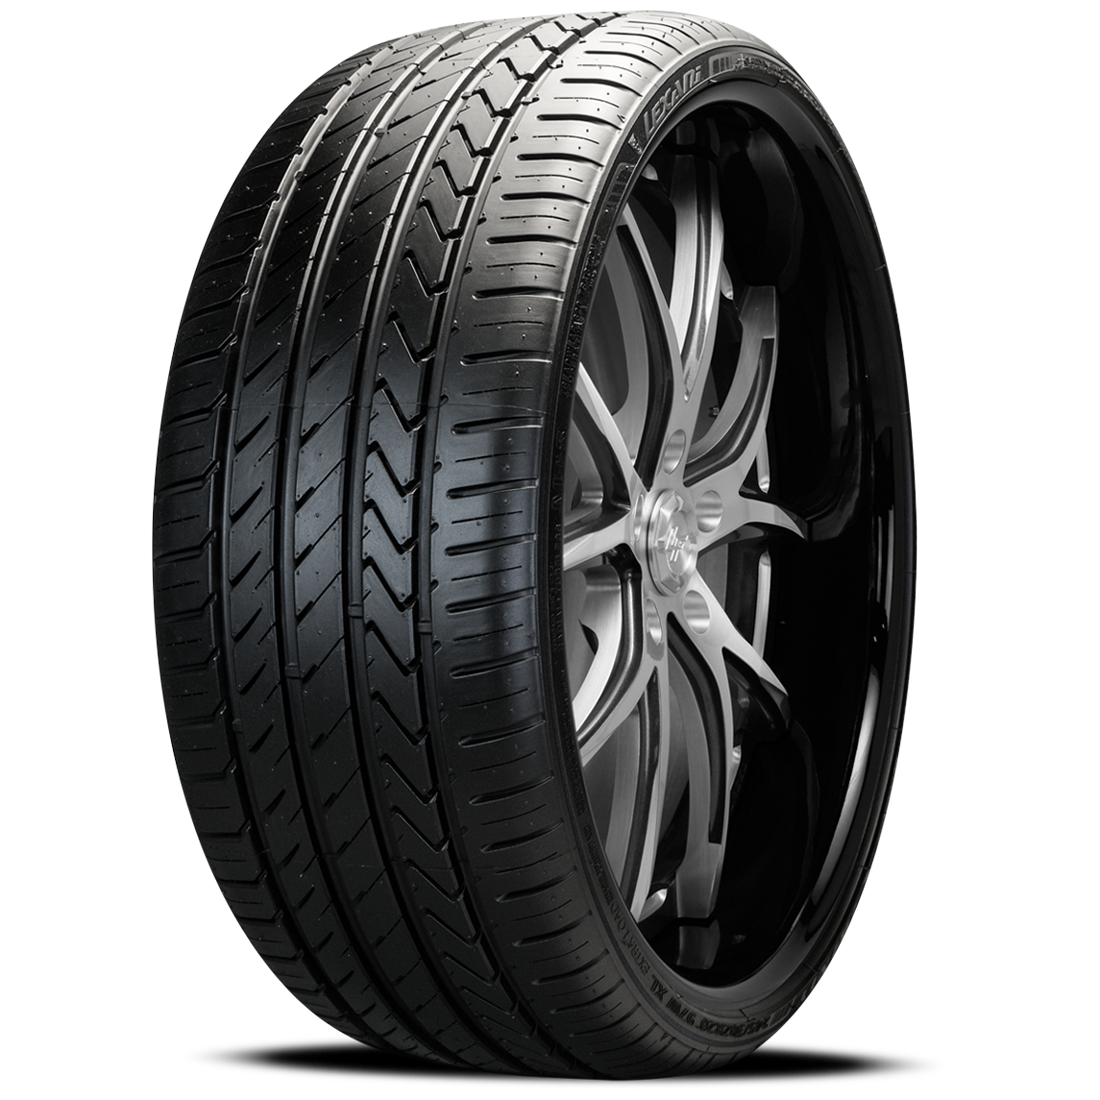 LEXANI LX-TWENTY 225/35ZR20 (26.2X9.1R 20) Tires